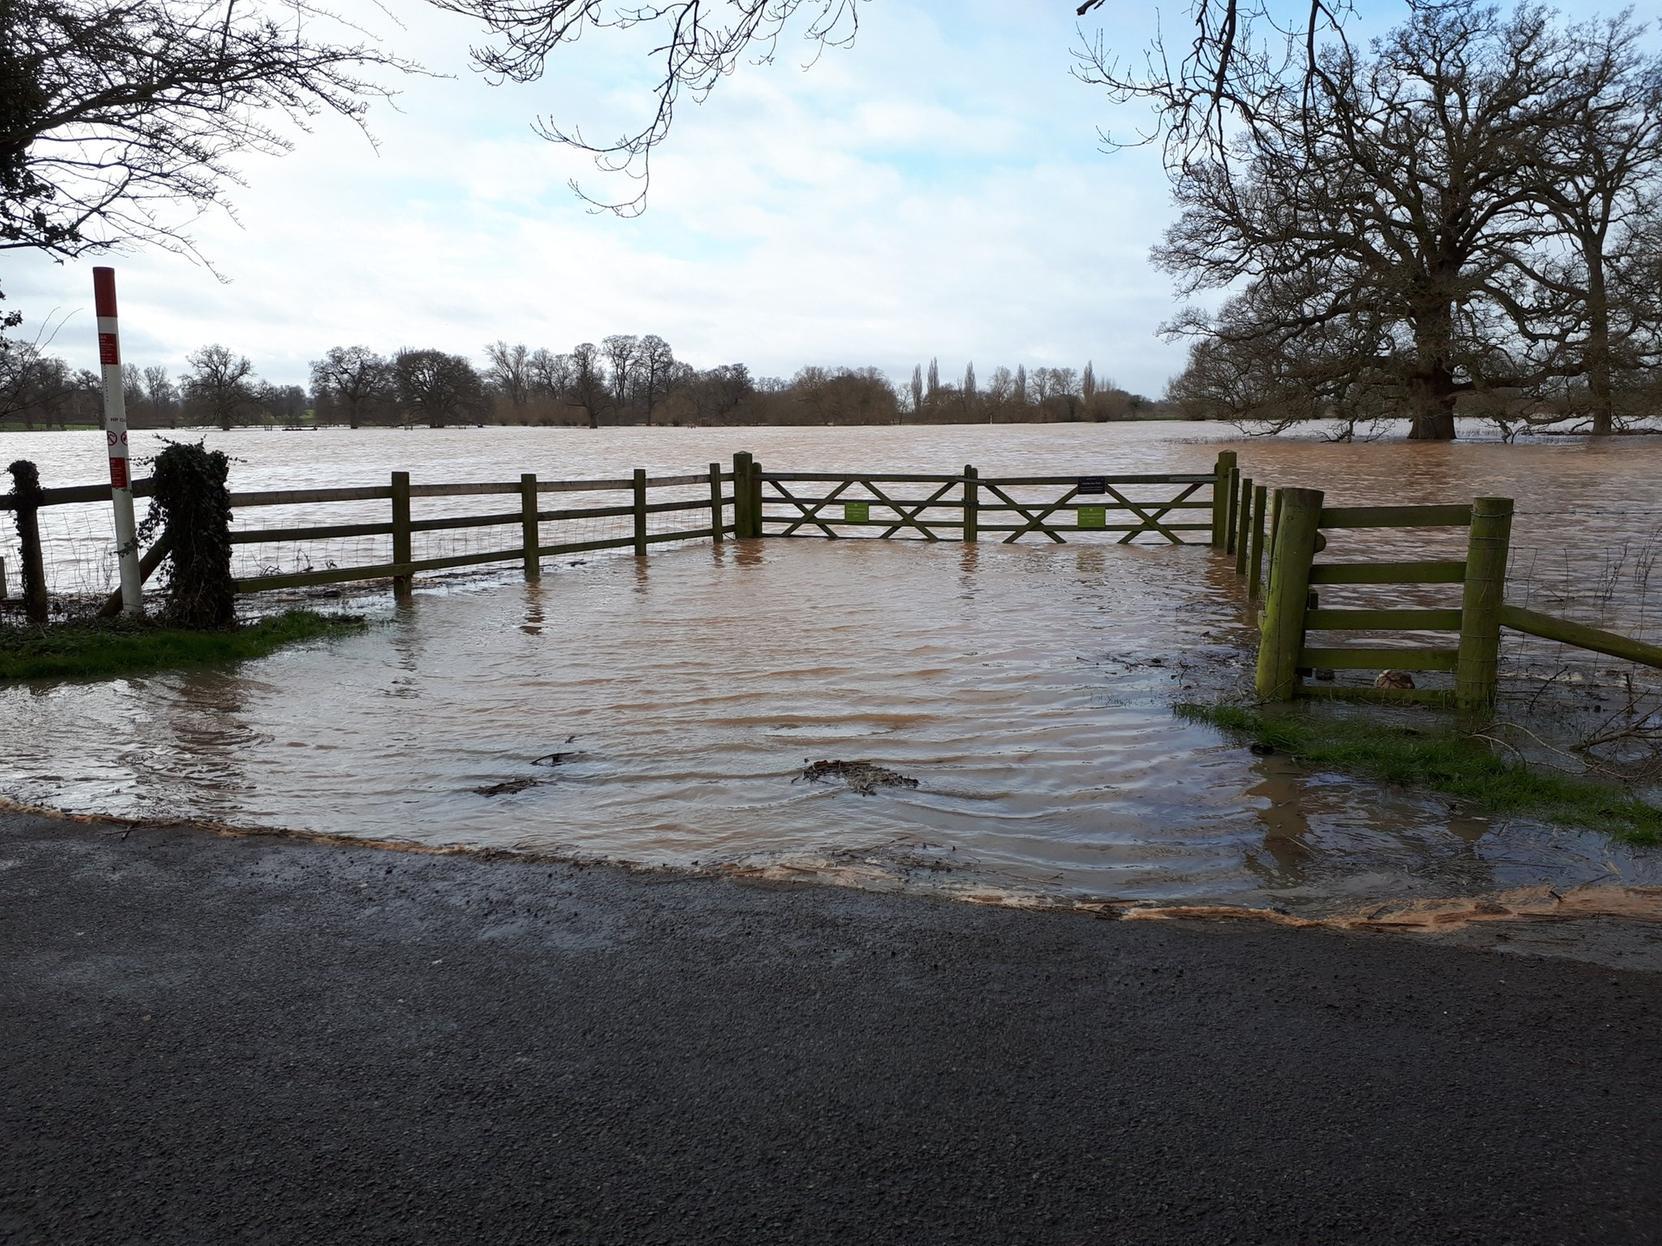 Flood waters near Hampton Lucy outside Wellesbourne (photo from Wellesbourne police)